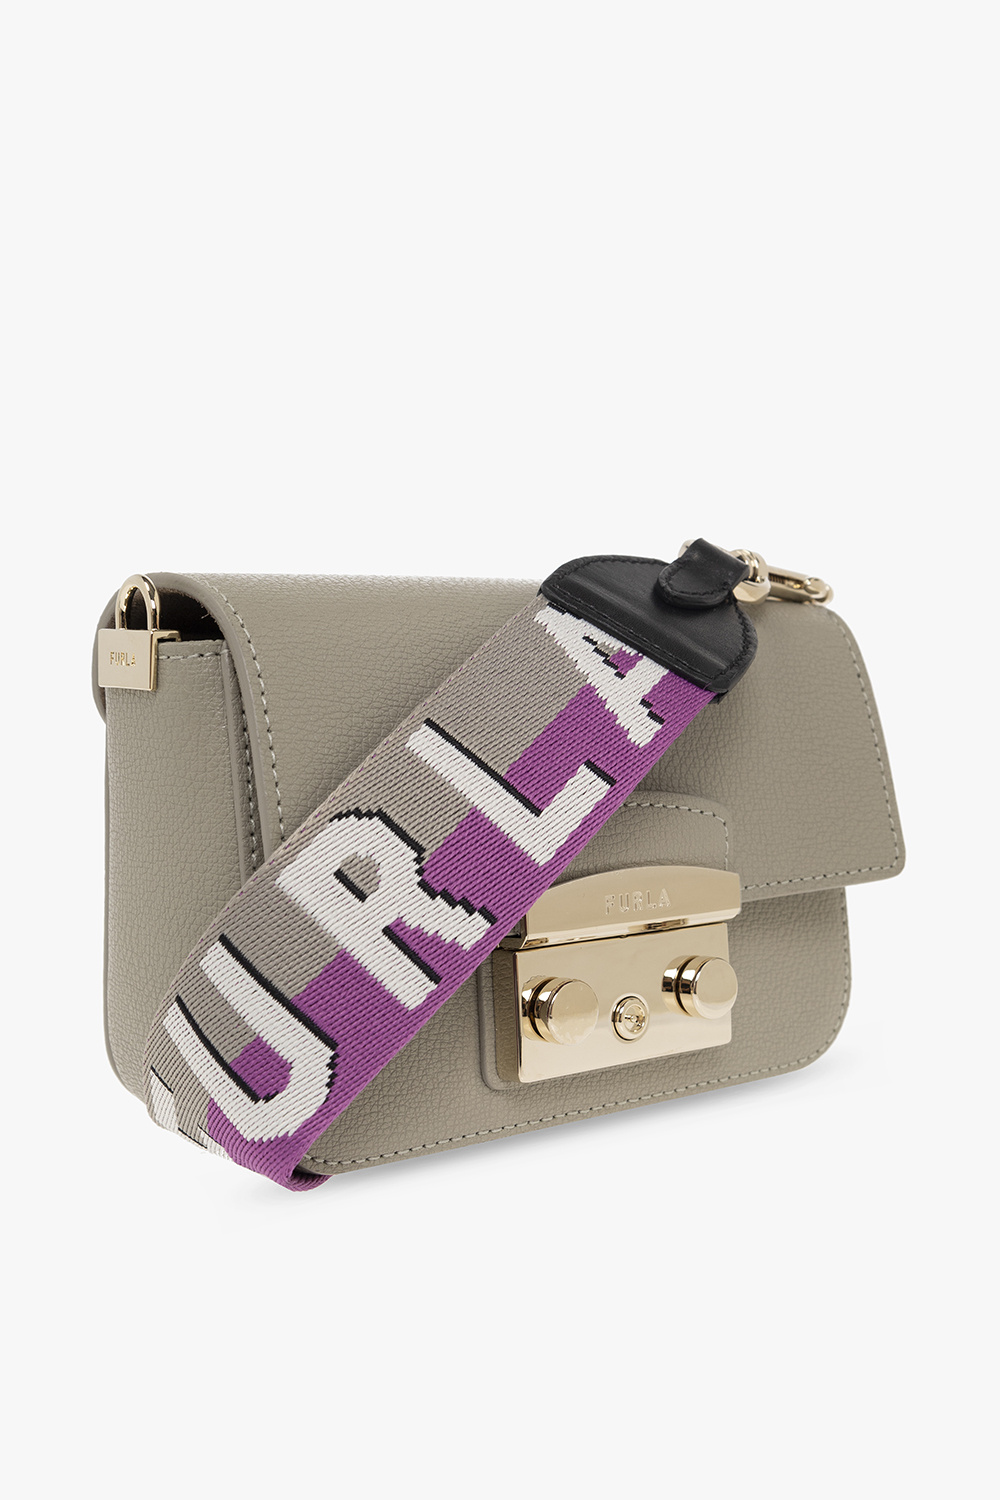 Furla Women's 'Metropolis Mini' Shoulder Bag - Gray - Shoulder Bags